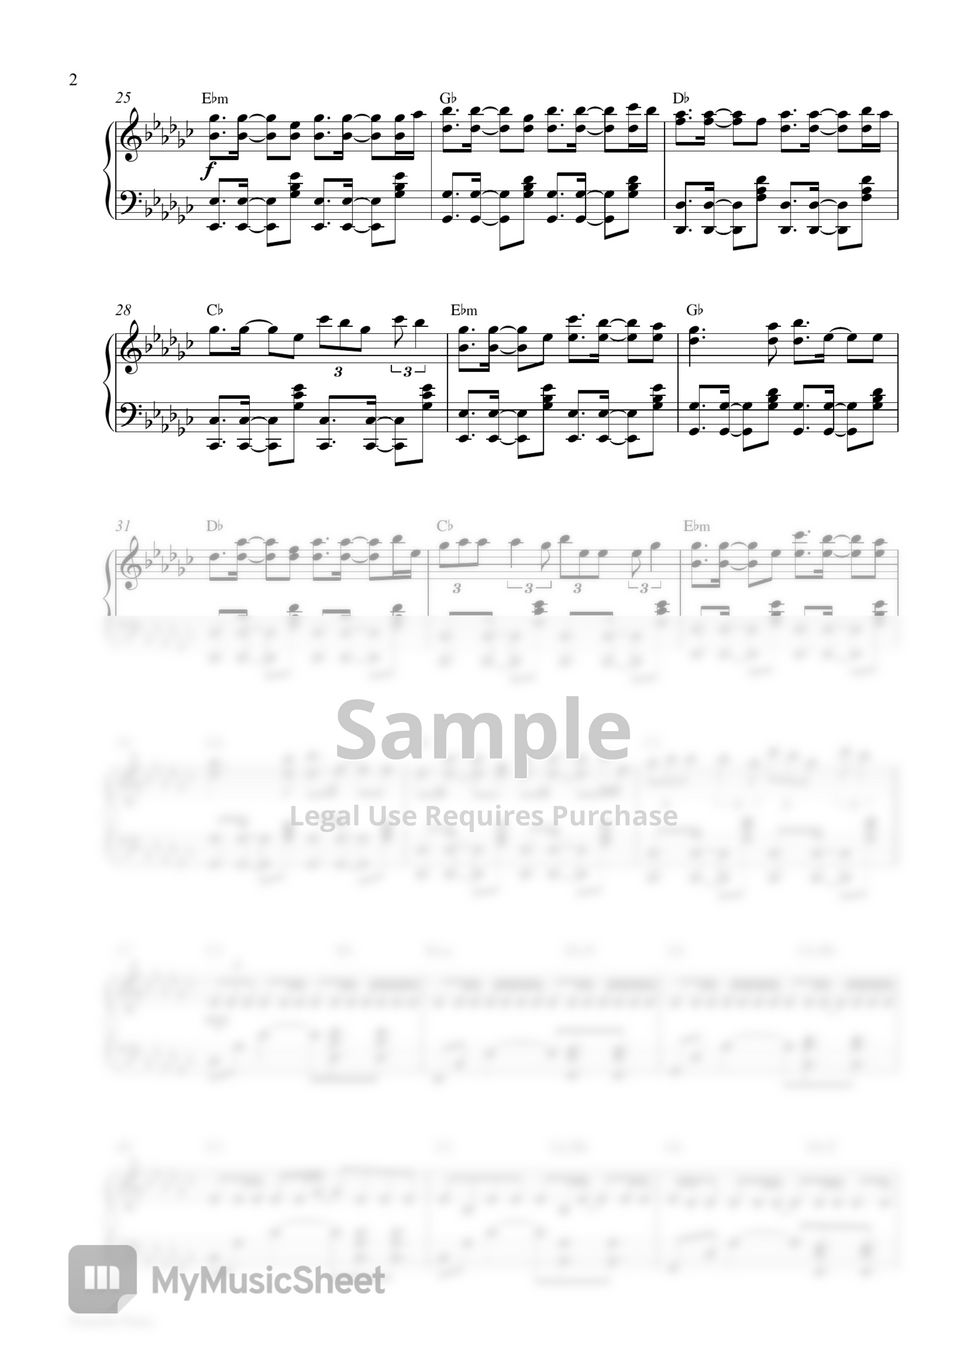 BLACKPINK X PUBGM - Ready For Love (2 PDF in Original Key Gb Major + Easier Key G Major) by Pianella Piano